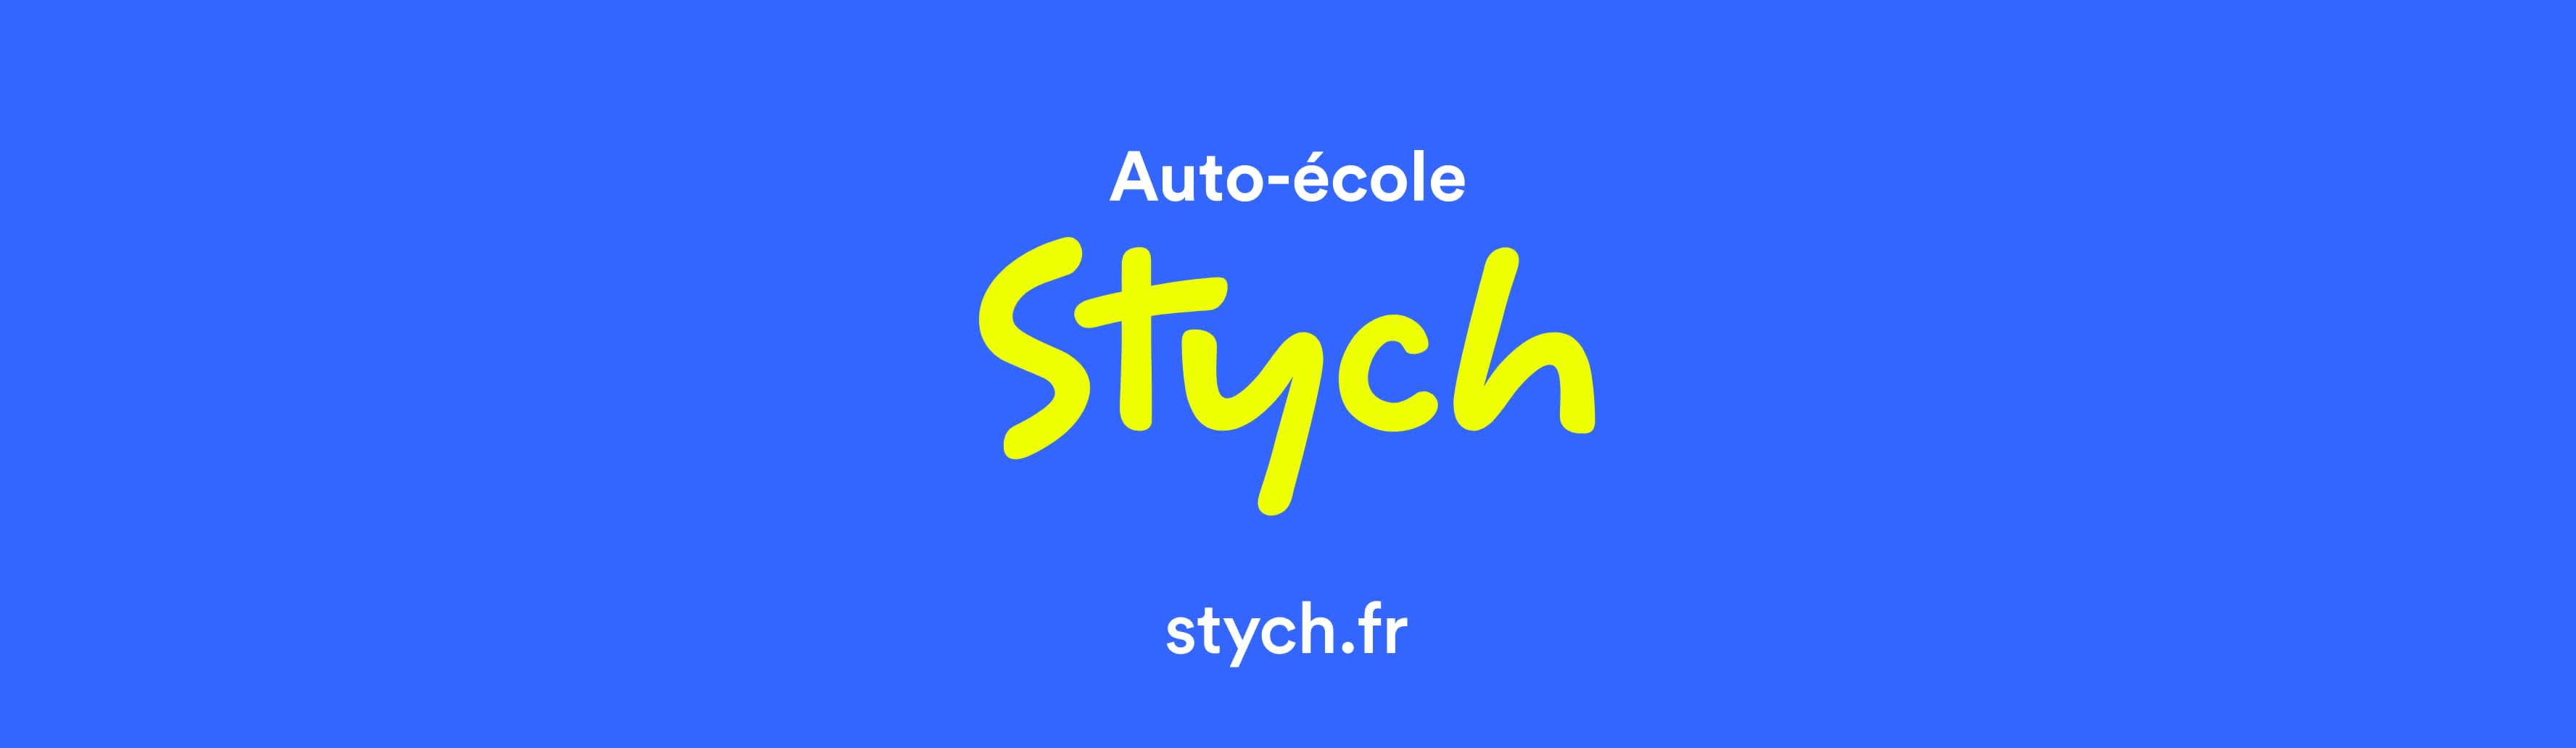 Image de Stych avis : Avis certifiés sur l’auto école Stych